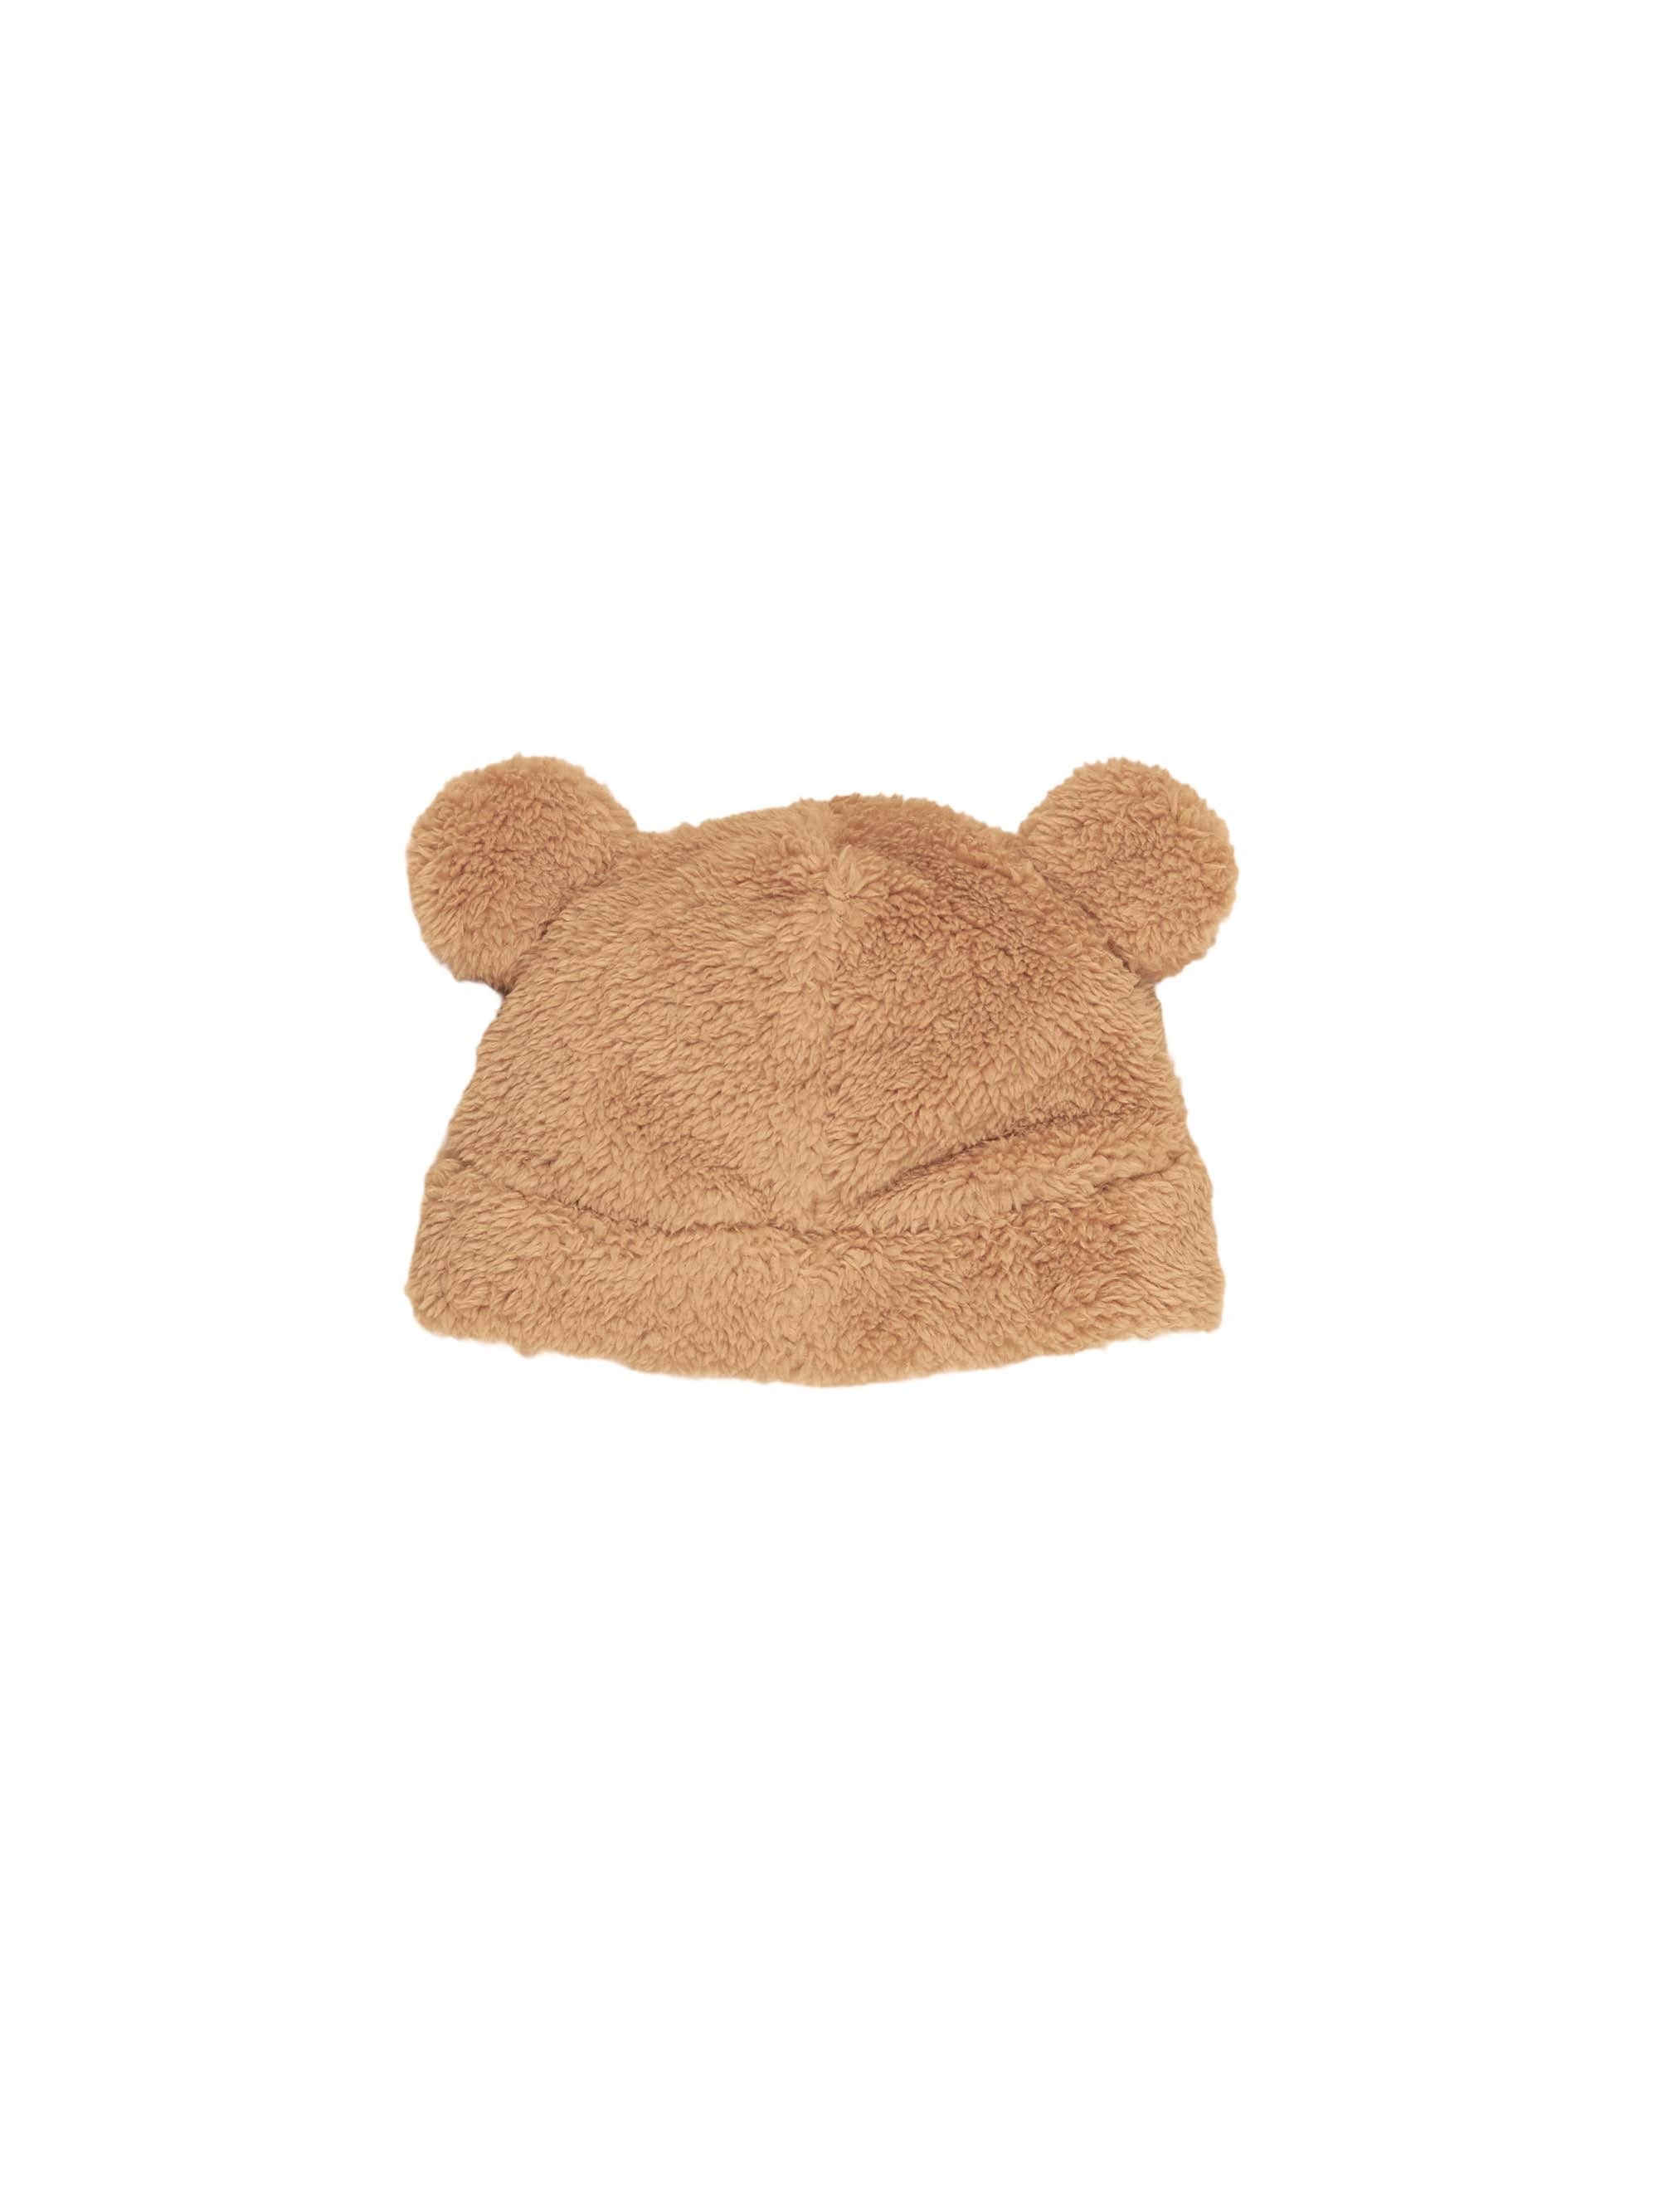 Huxbaby Accessories Hats Teddy Bear Fur Beanie